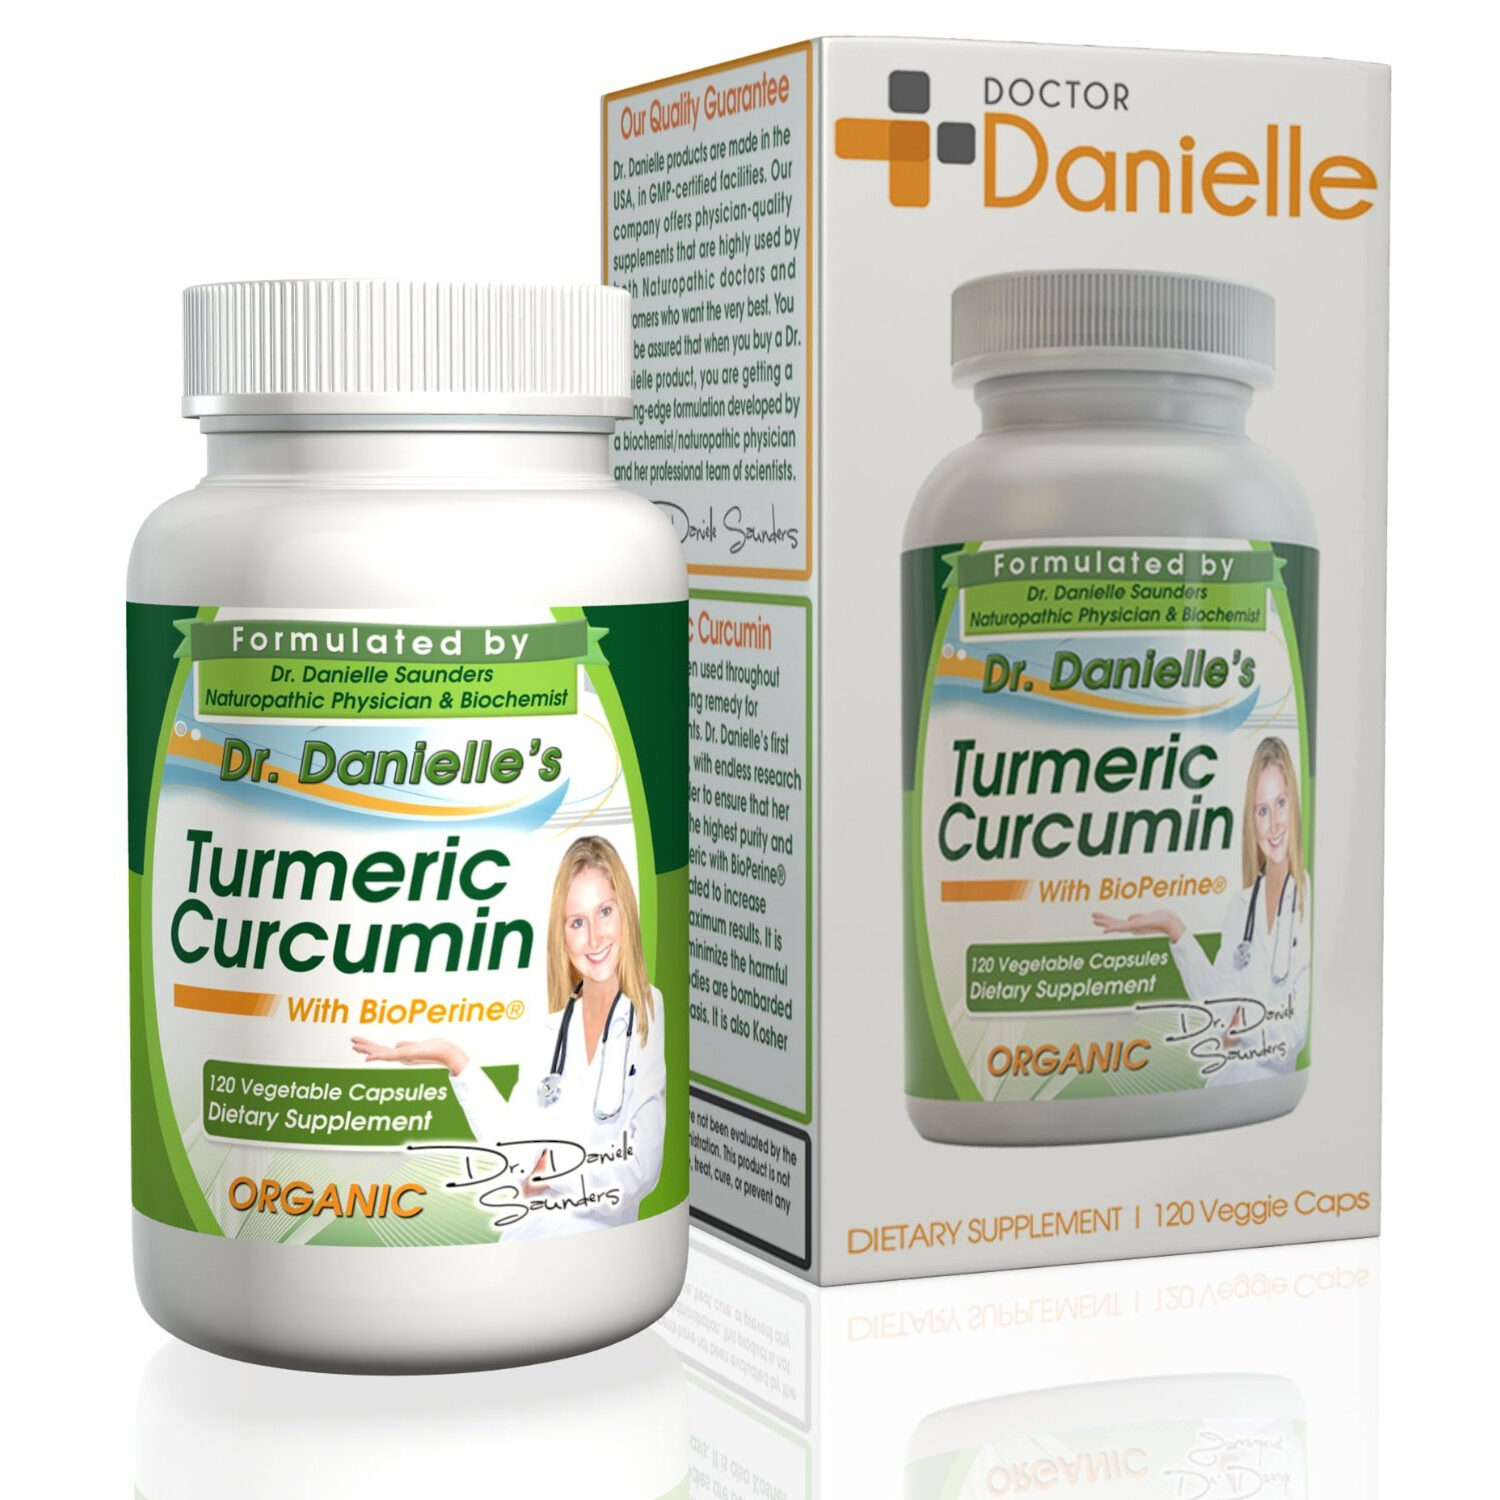 Dr. Danielle's Turmeric Curcumin with Bioperinerevised